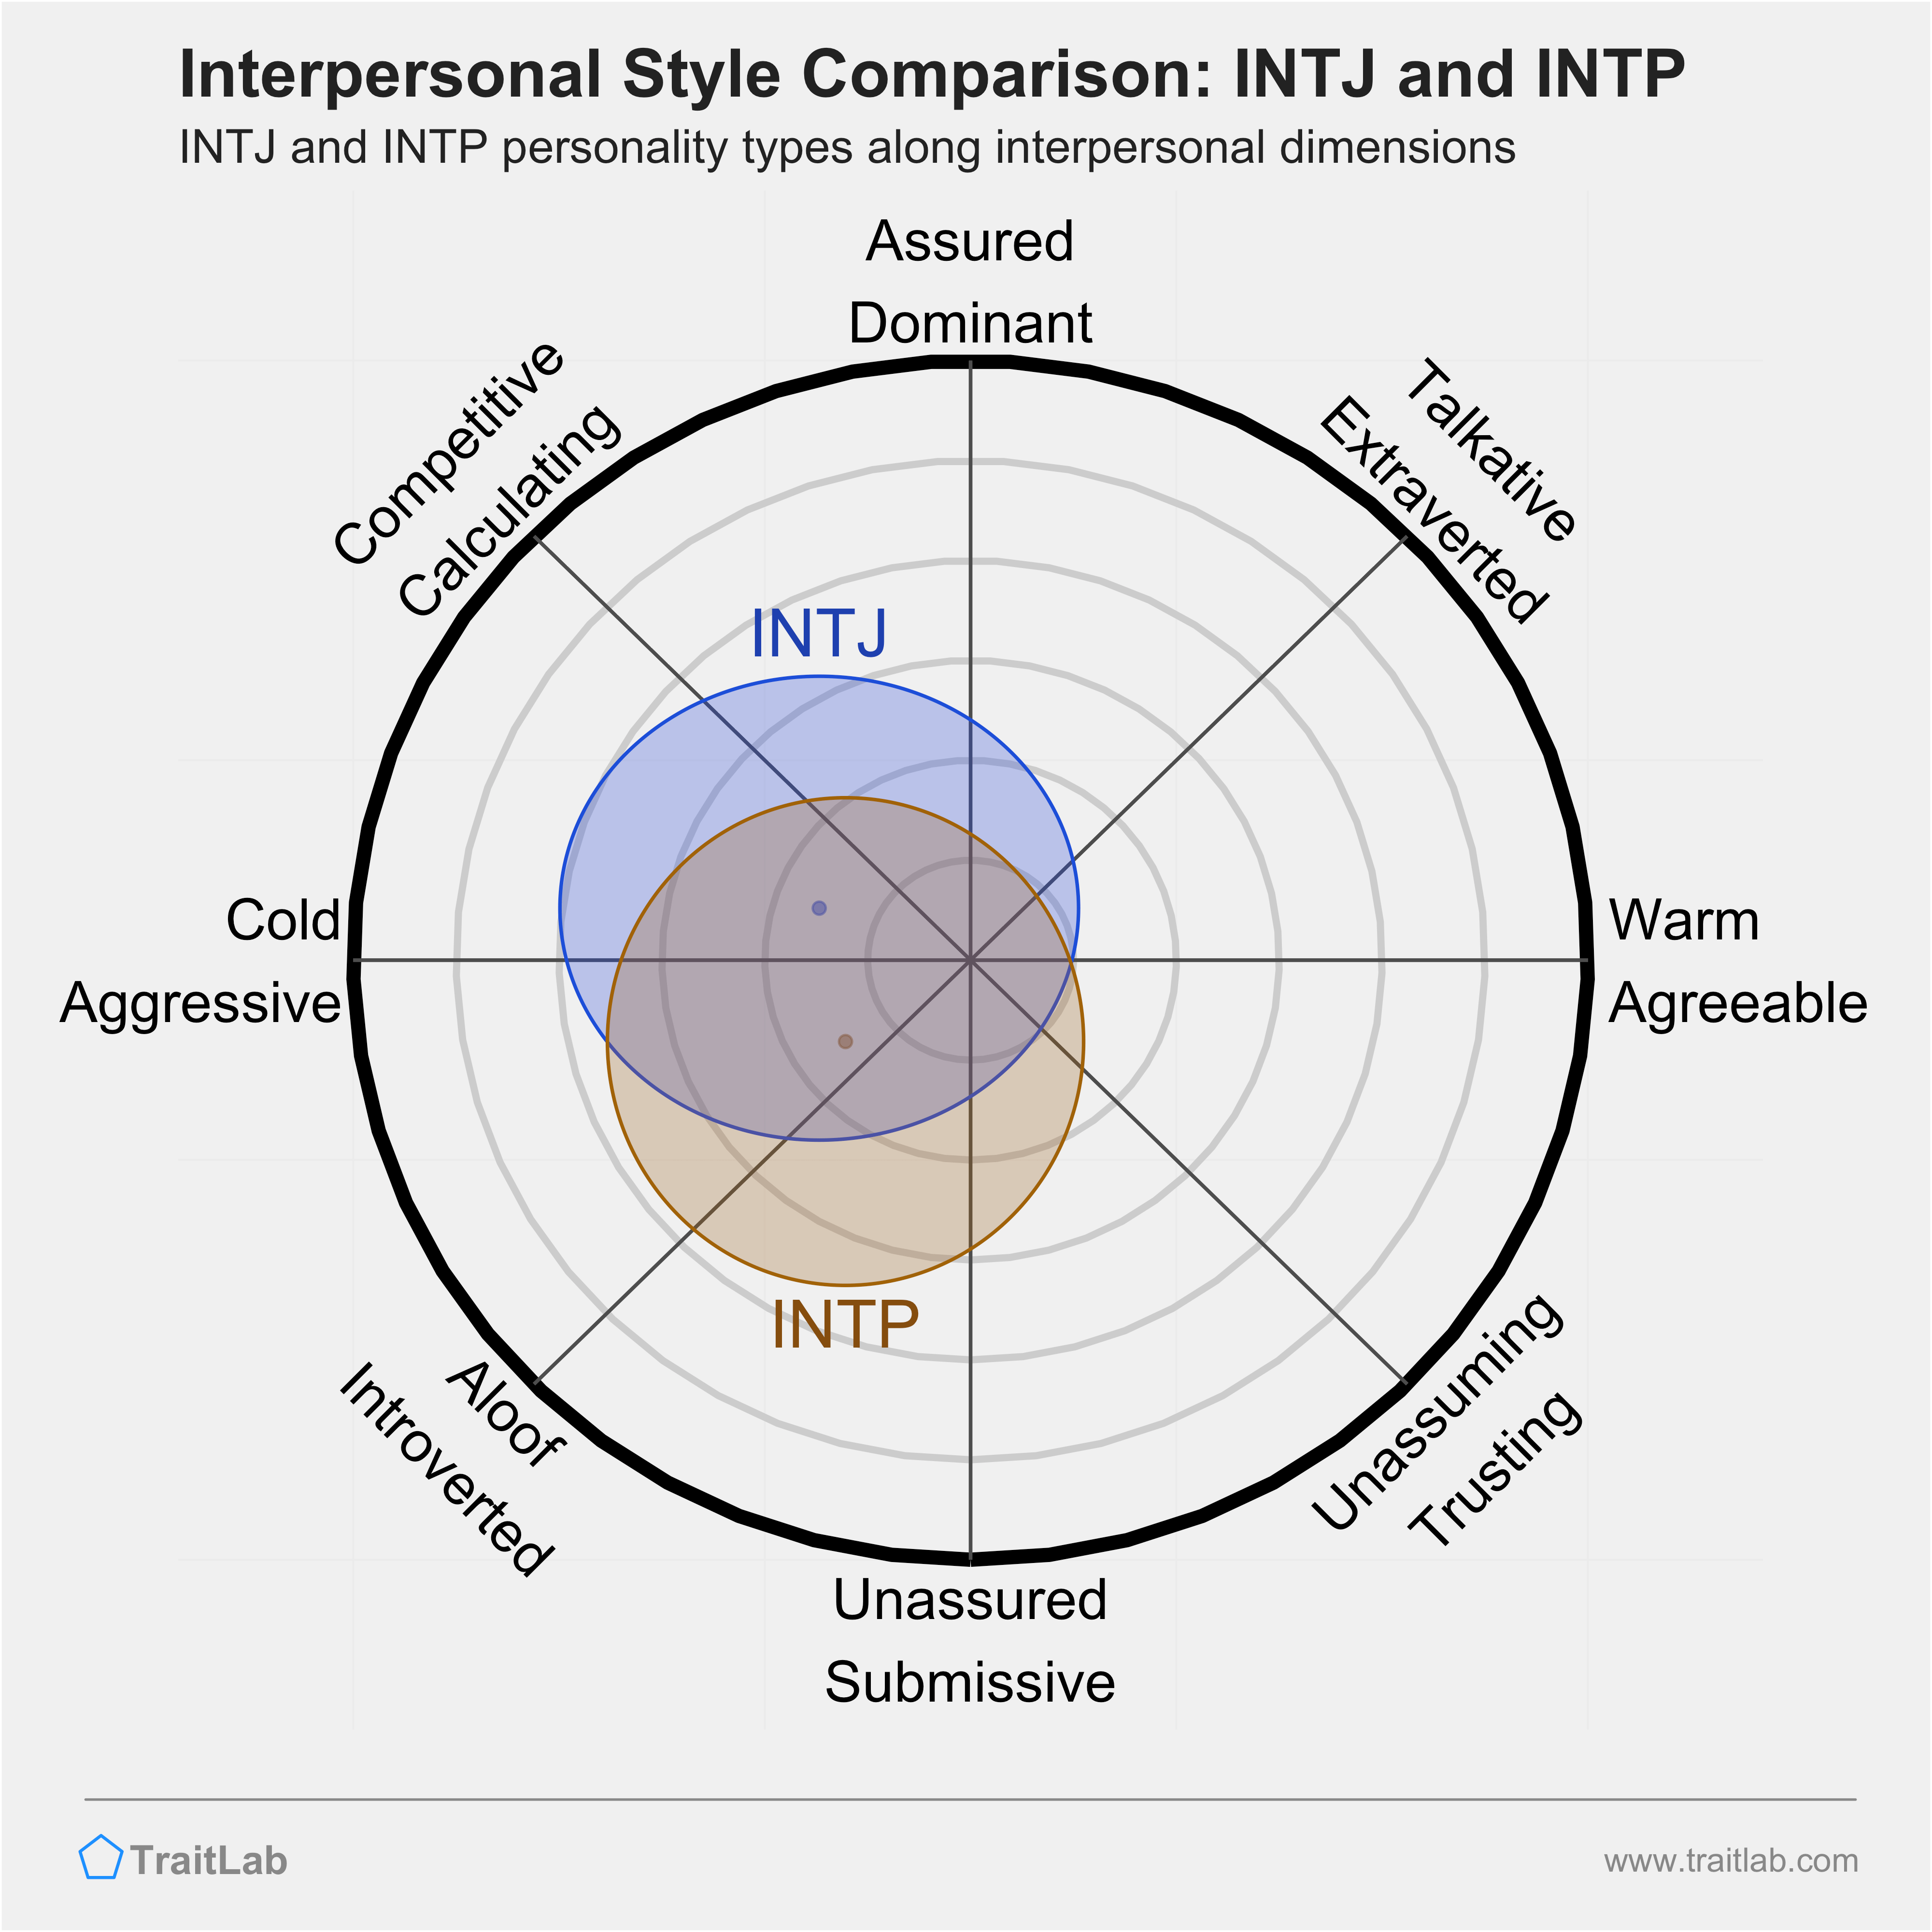 INTJ and INTP comparison across interpersonal dimensions